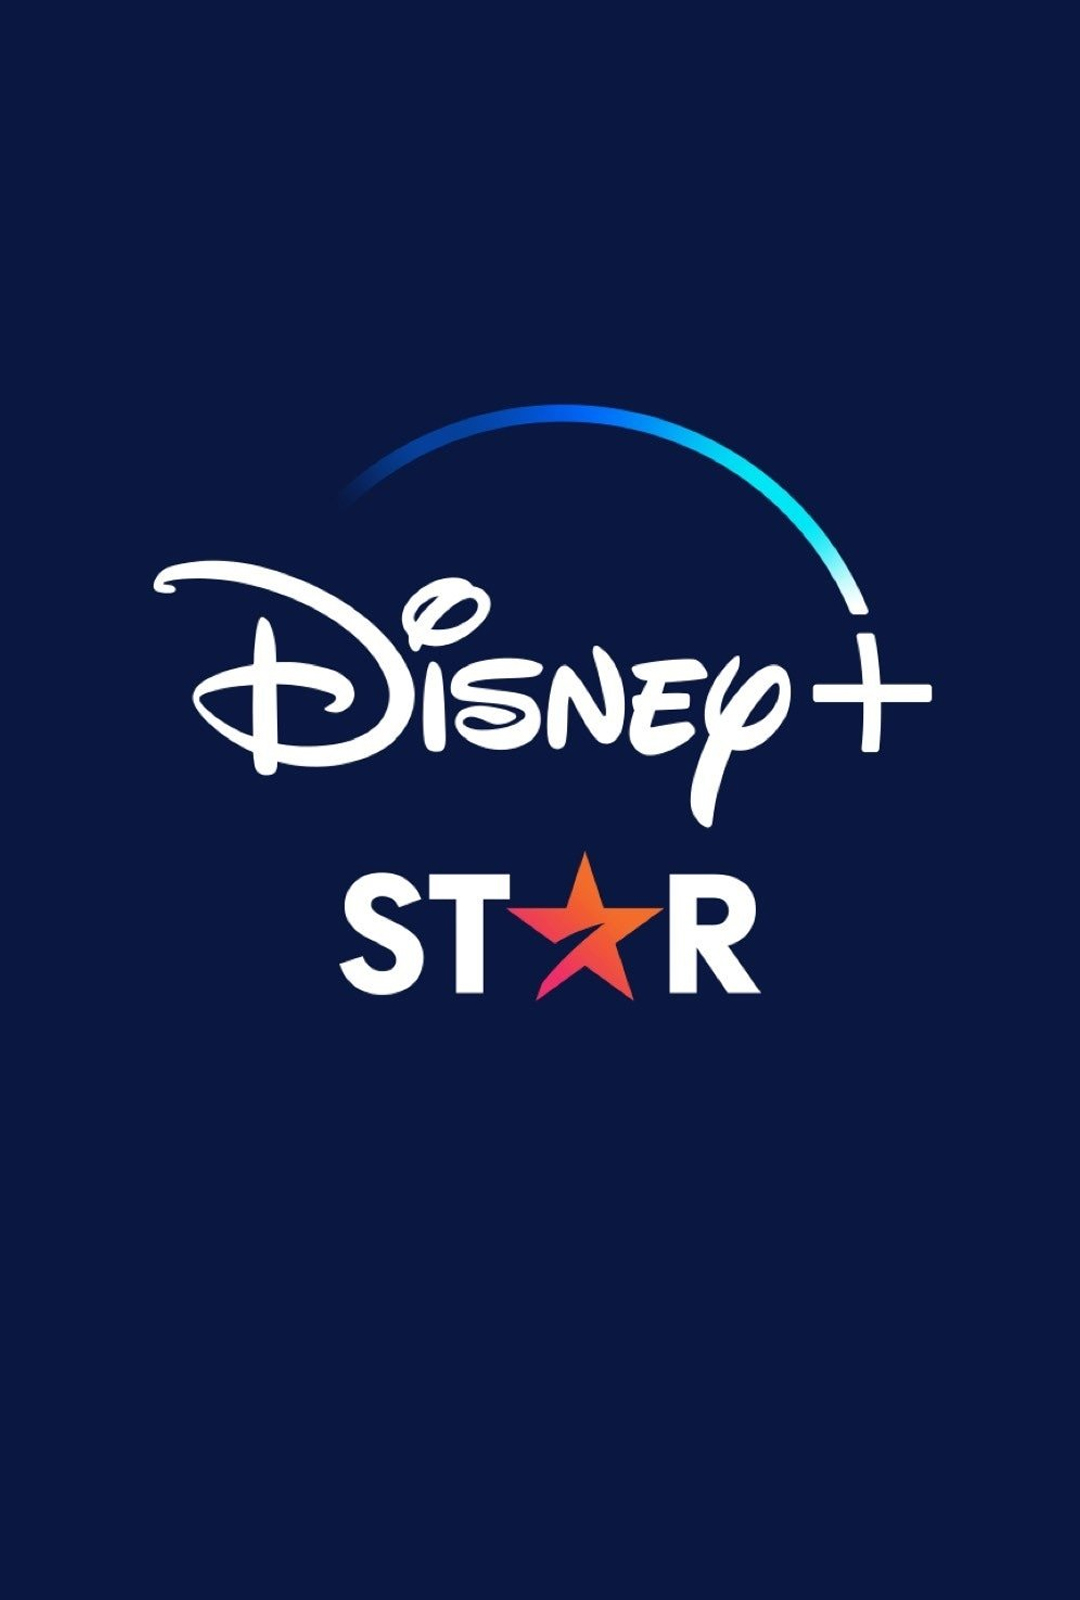 Disney+ Star logo